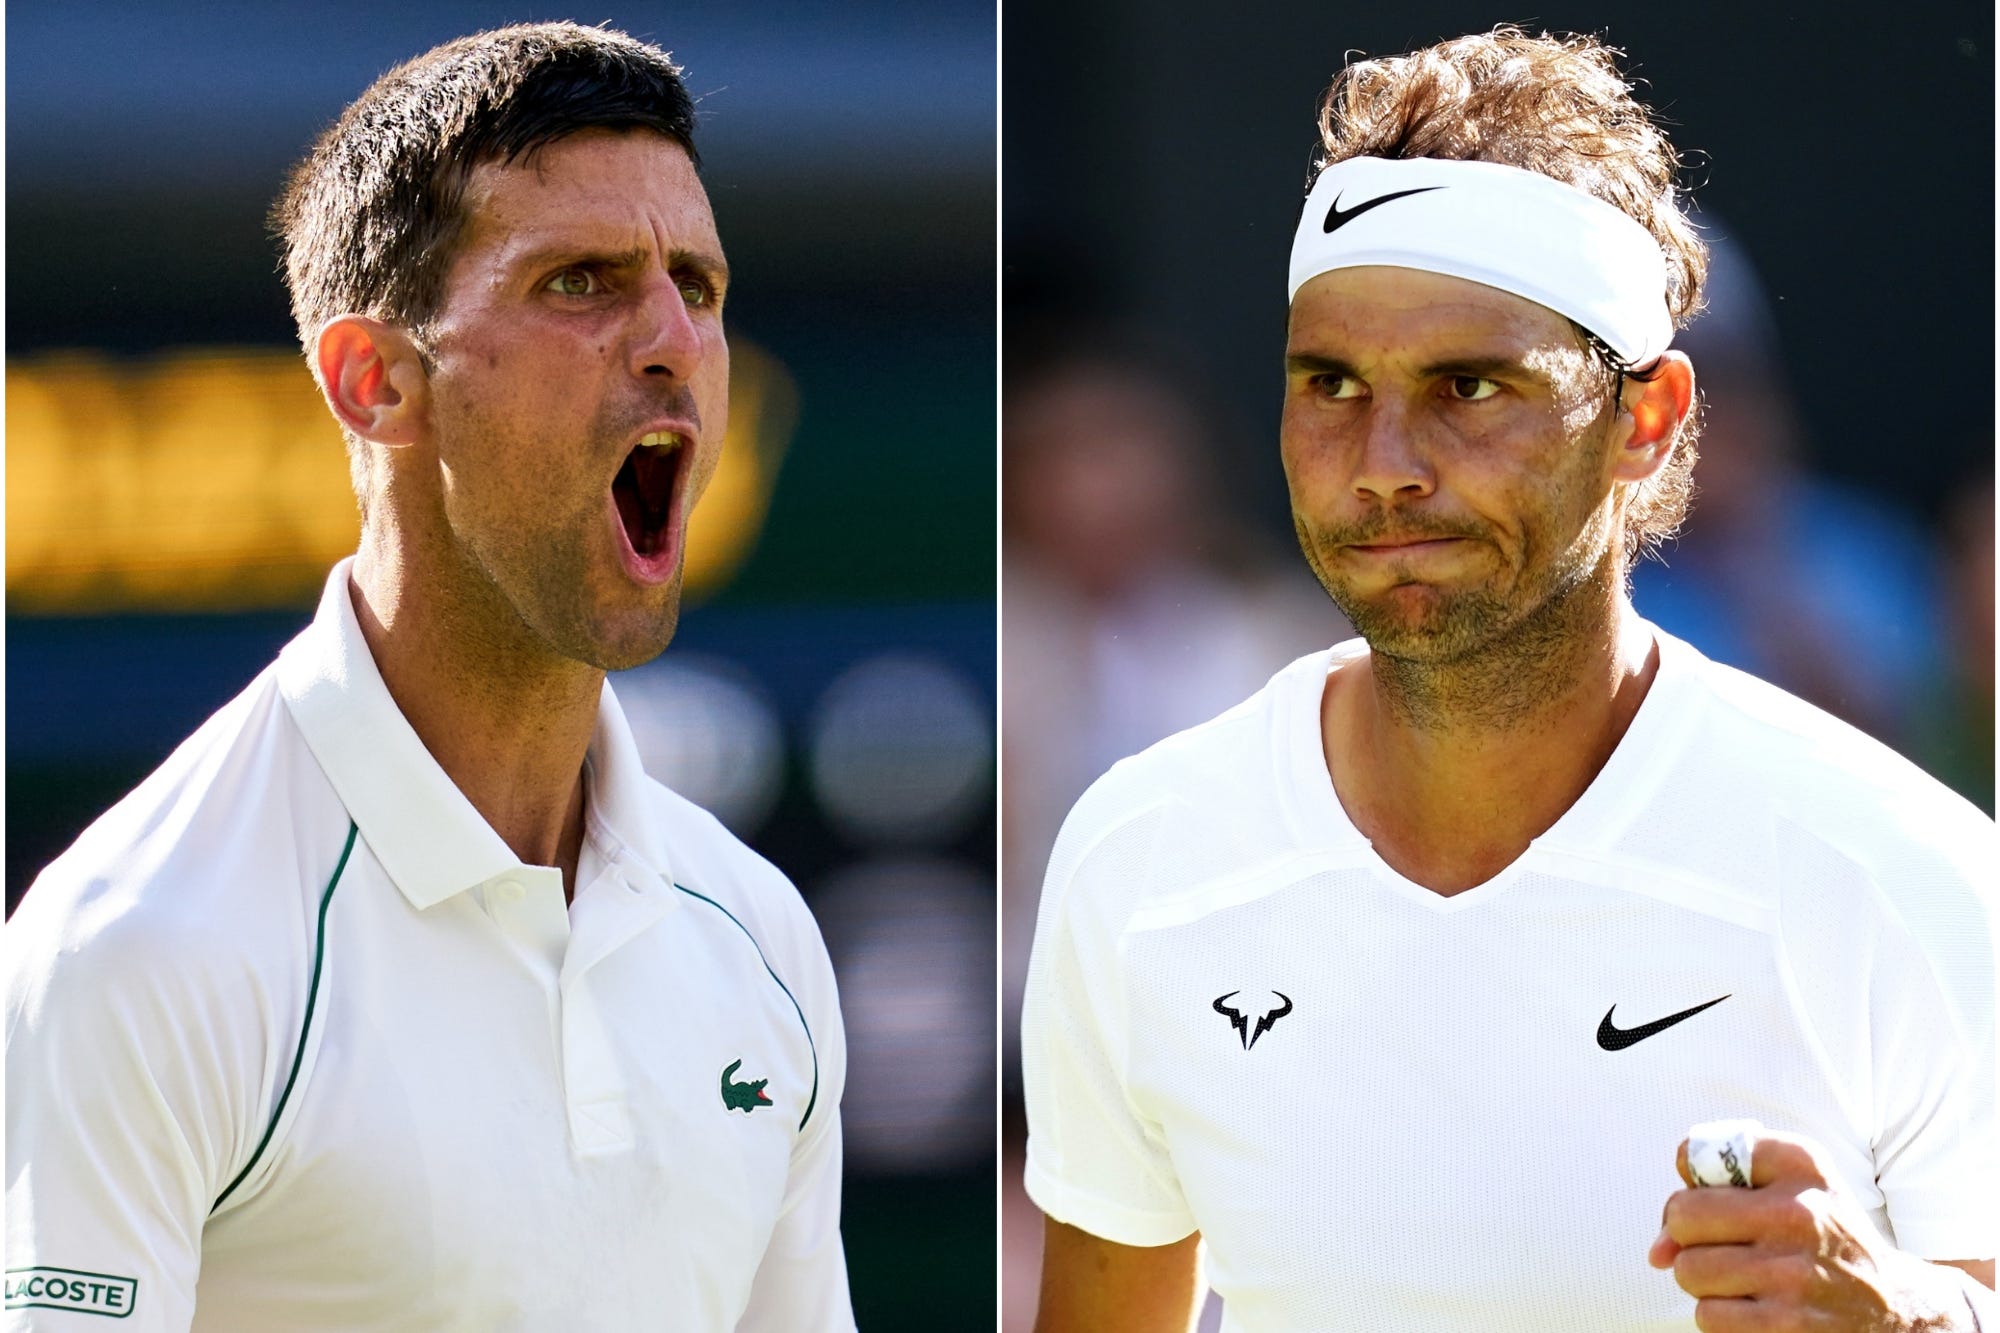 Novak Djokovic vs Rafael Nadal Who will win the most grand slams? The Independent